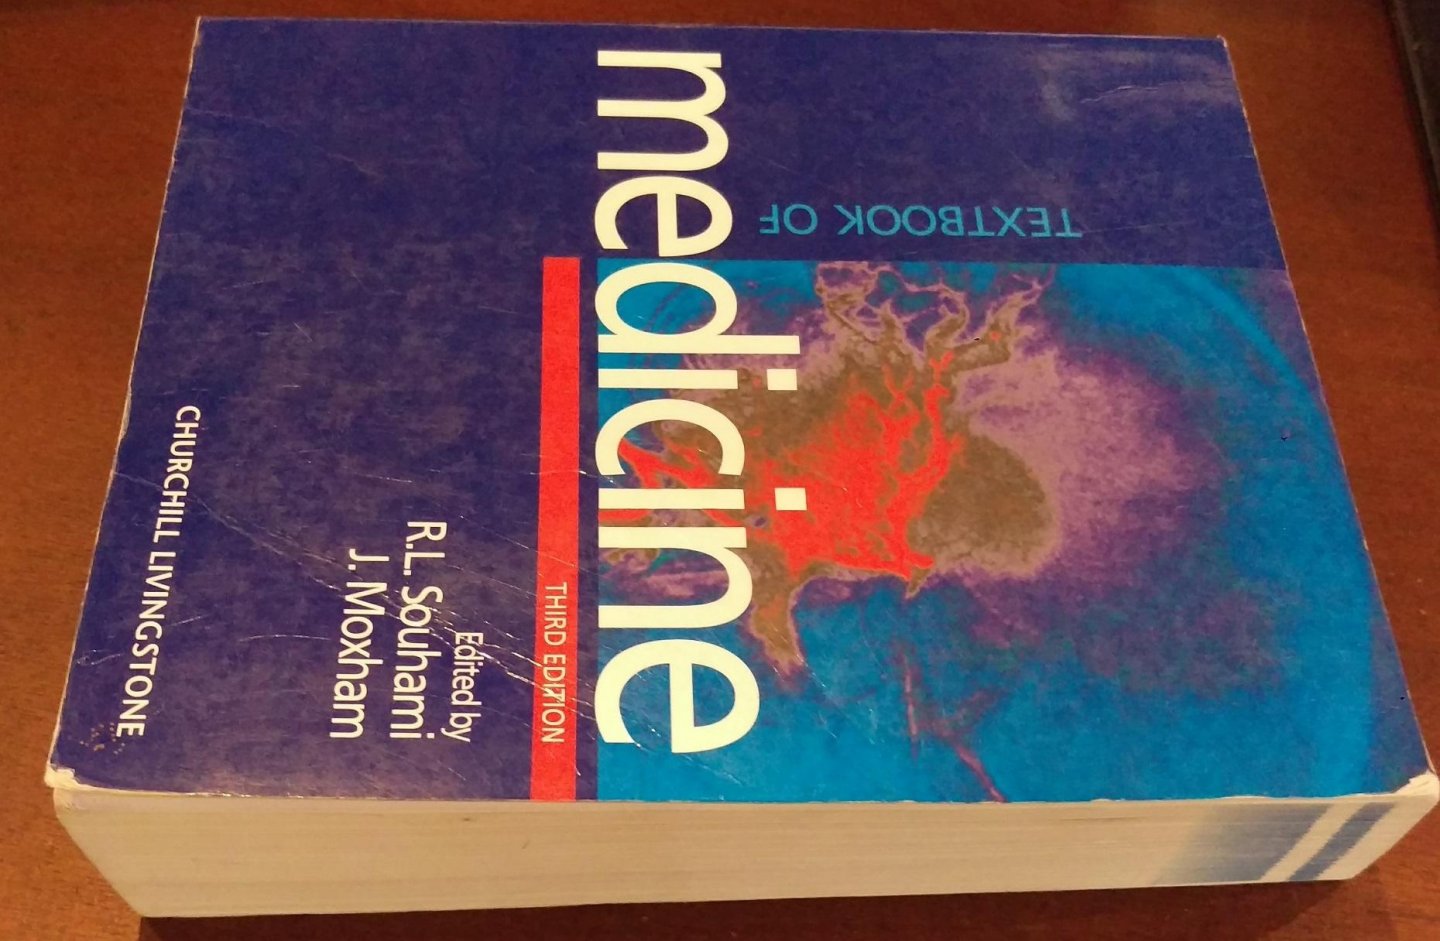 R.L. Douhami, J. Moxham Eds. - Textbook of medicine